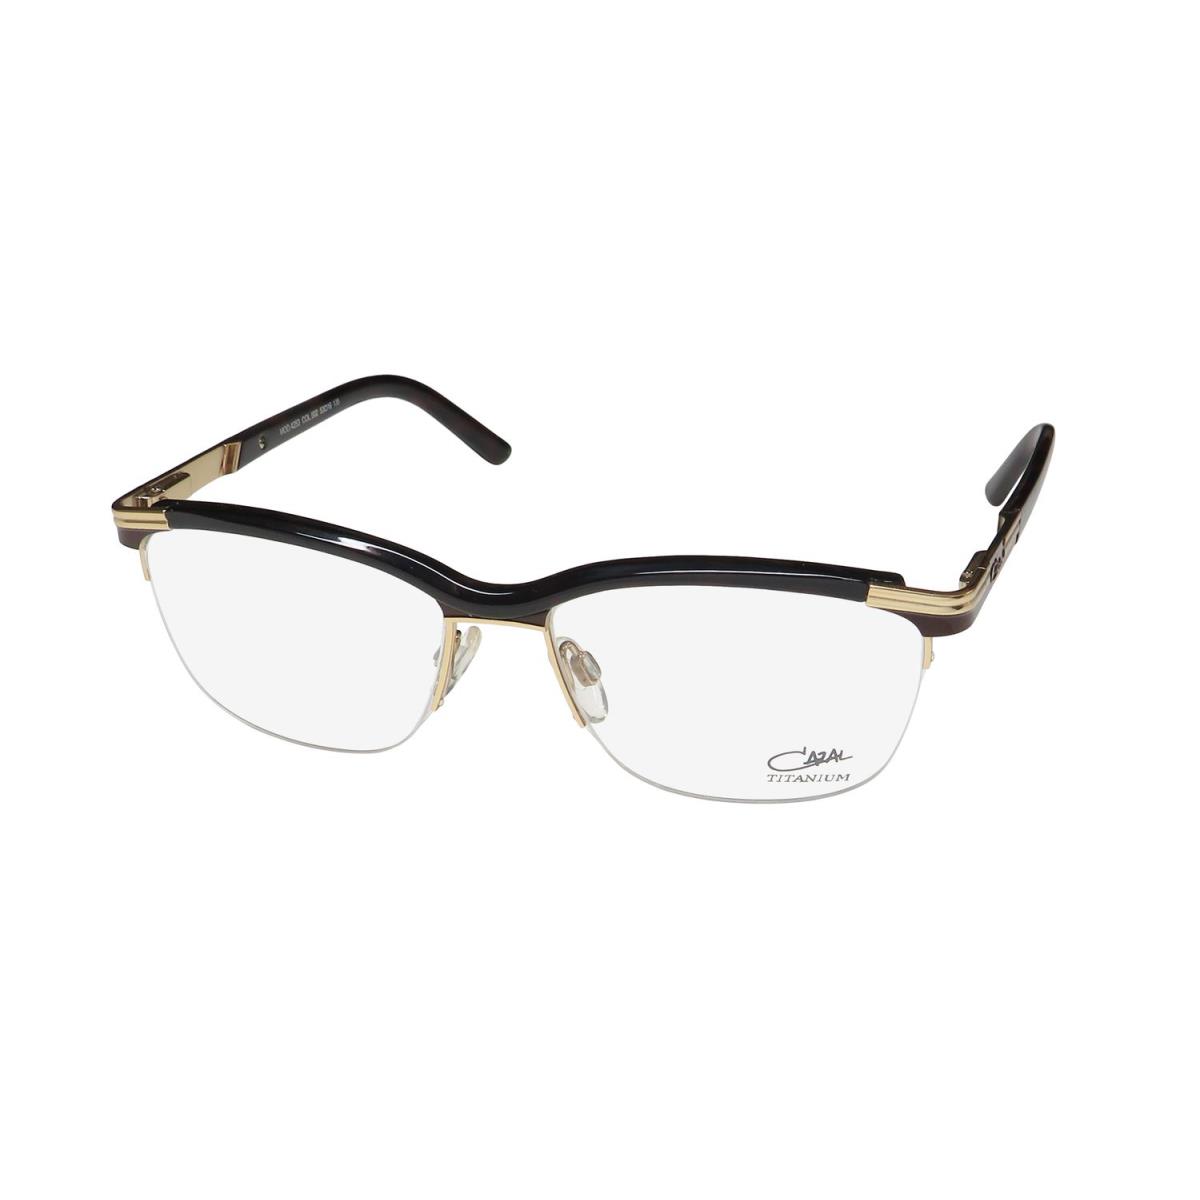 Cazal 4253 Titanium Made IN Germany NO Allergy Materials Eyeglass Frame/eyewear Tortoise / Gold